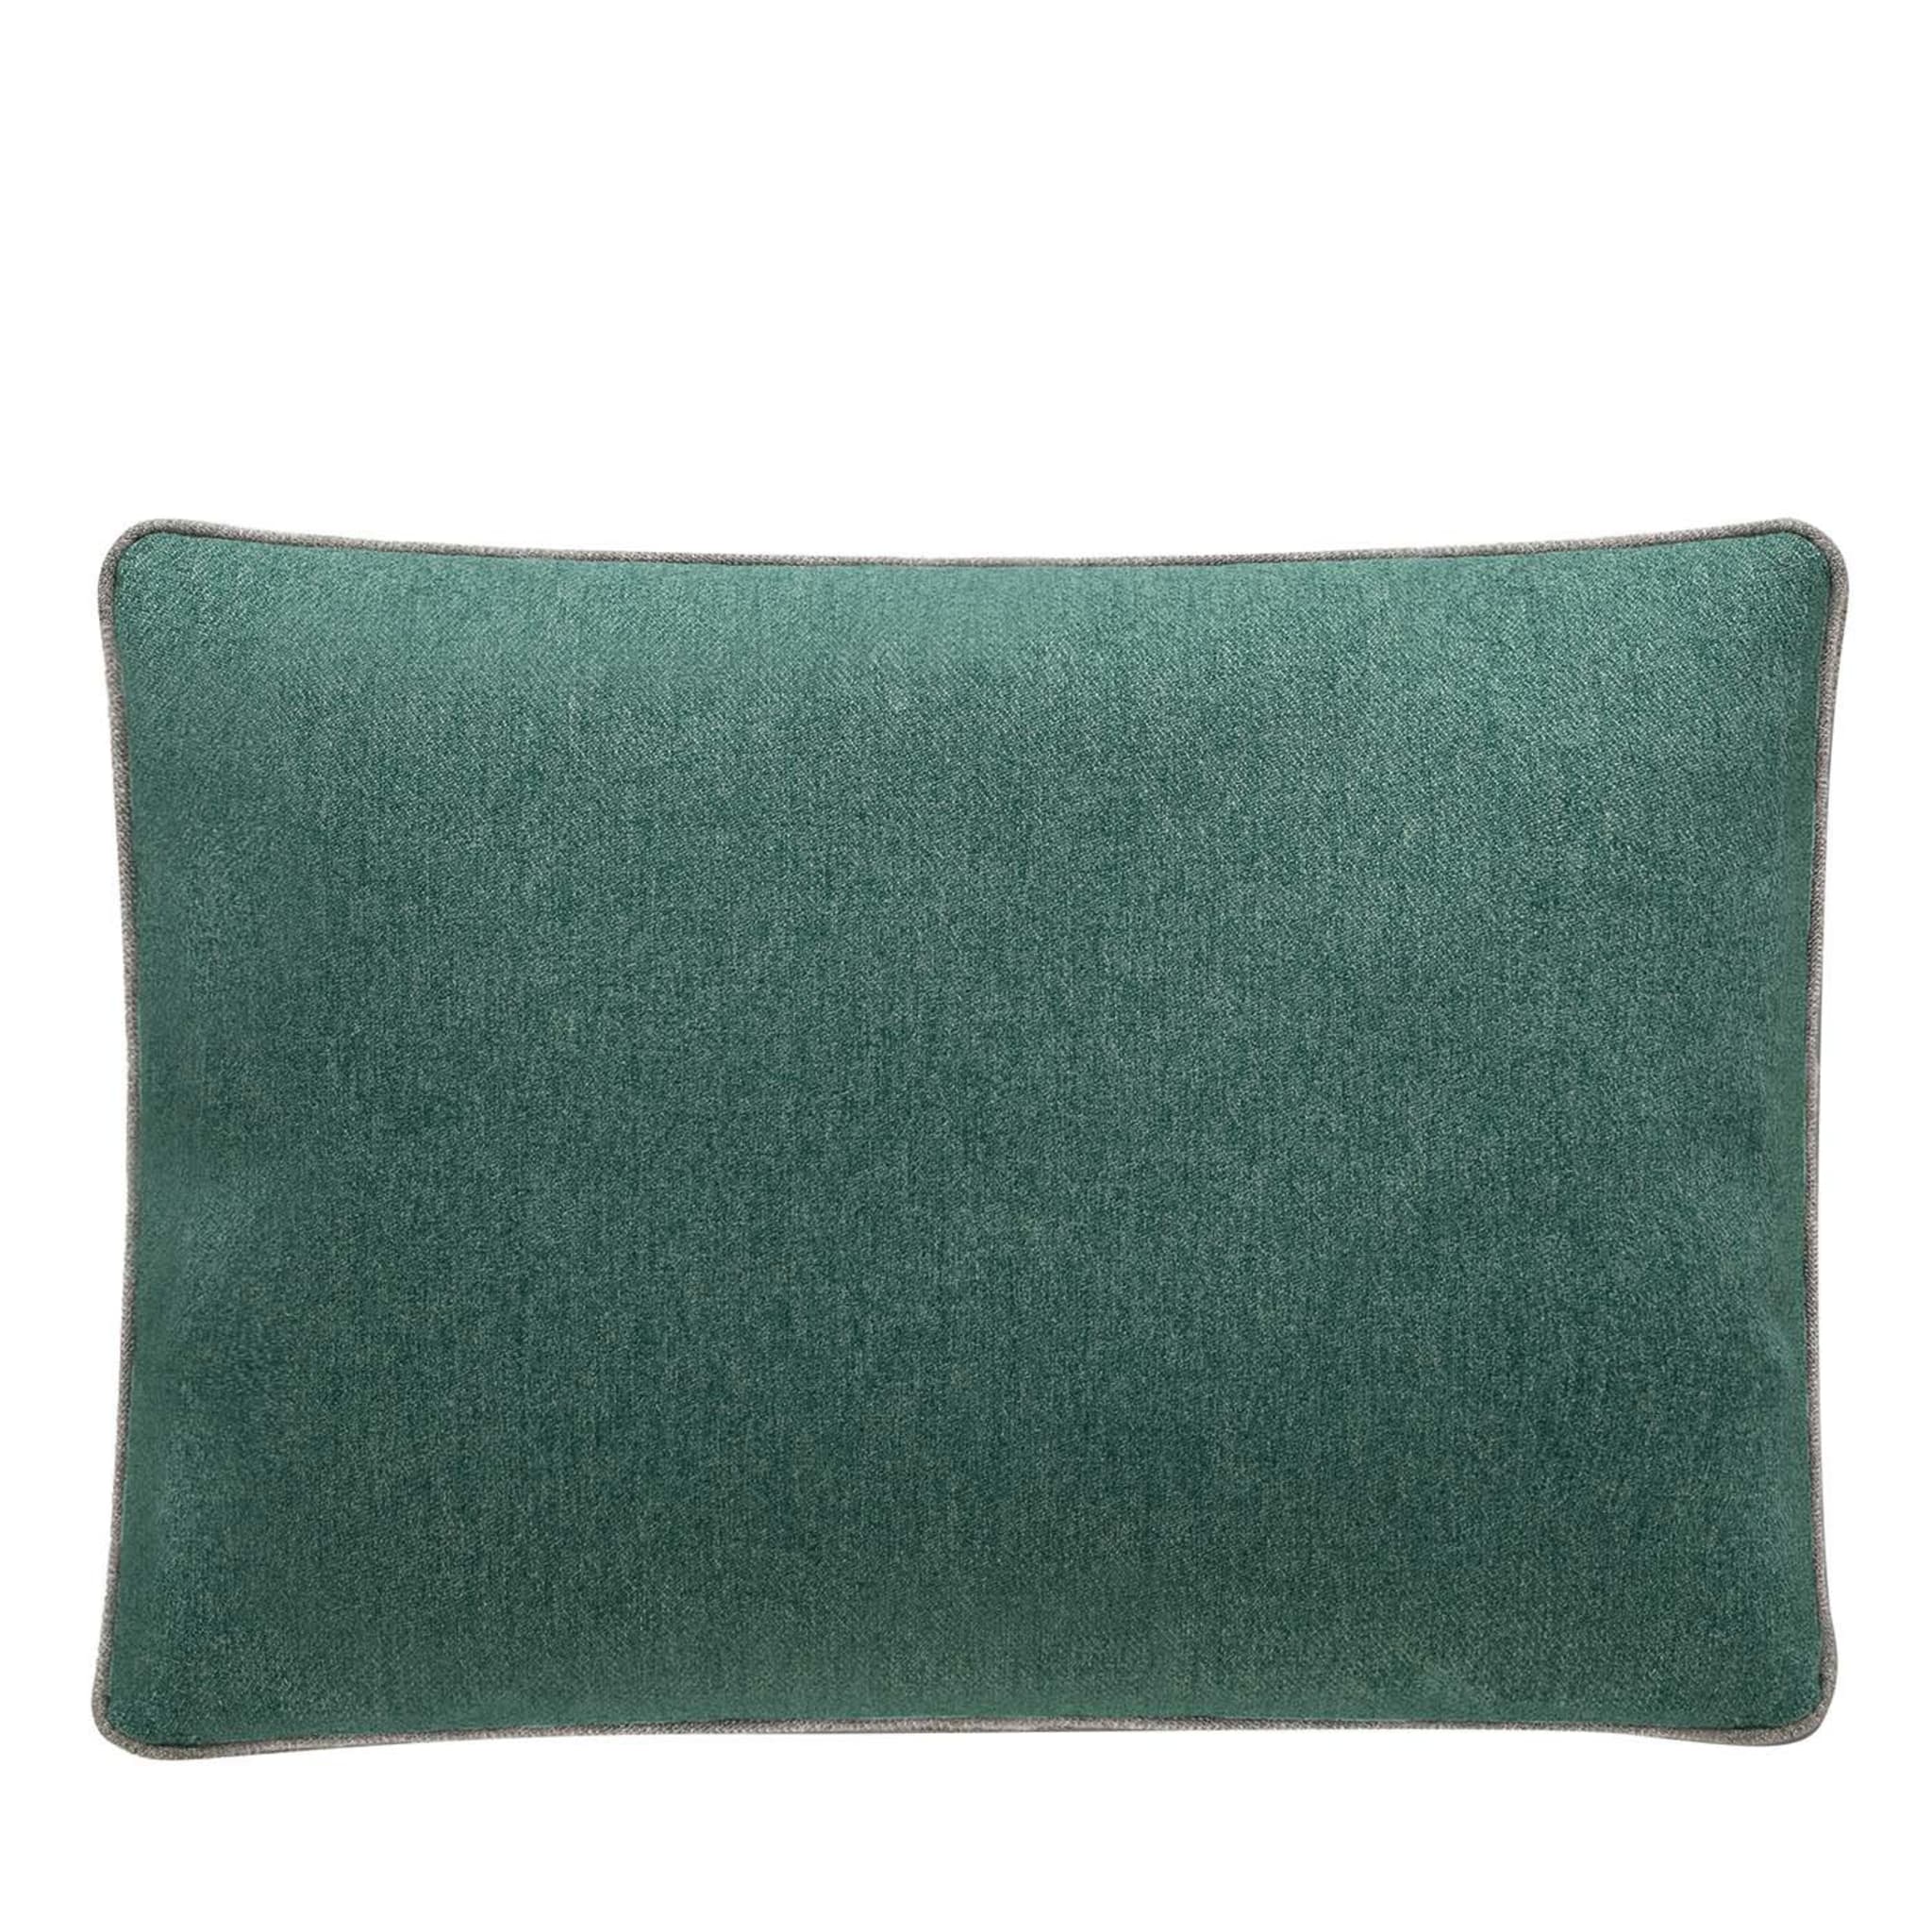 Conny Green Rectangular Cushion - Main view